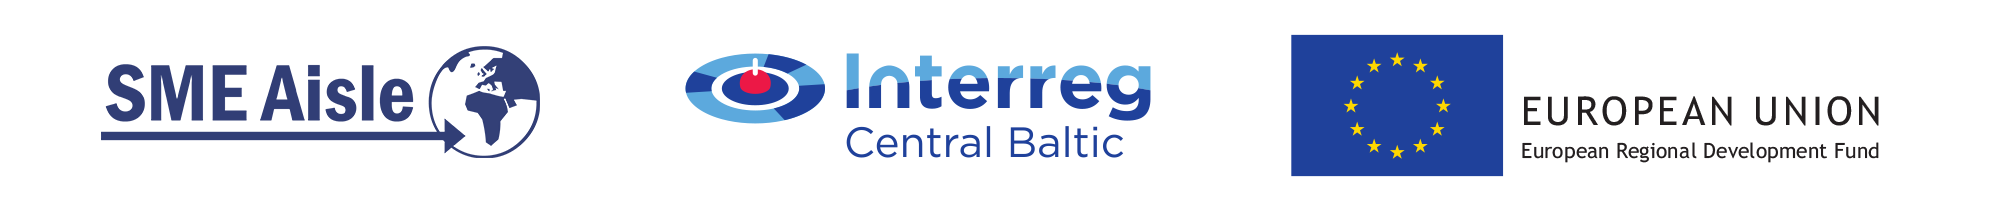 Logos: SME Aisle, Interreg Central Baltic and European Regional Development Fund